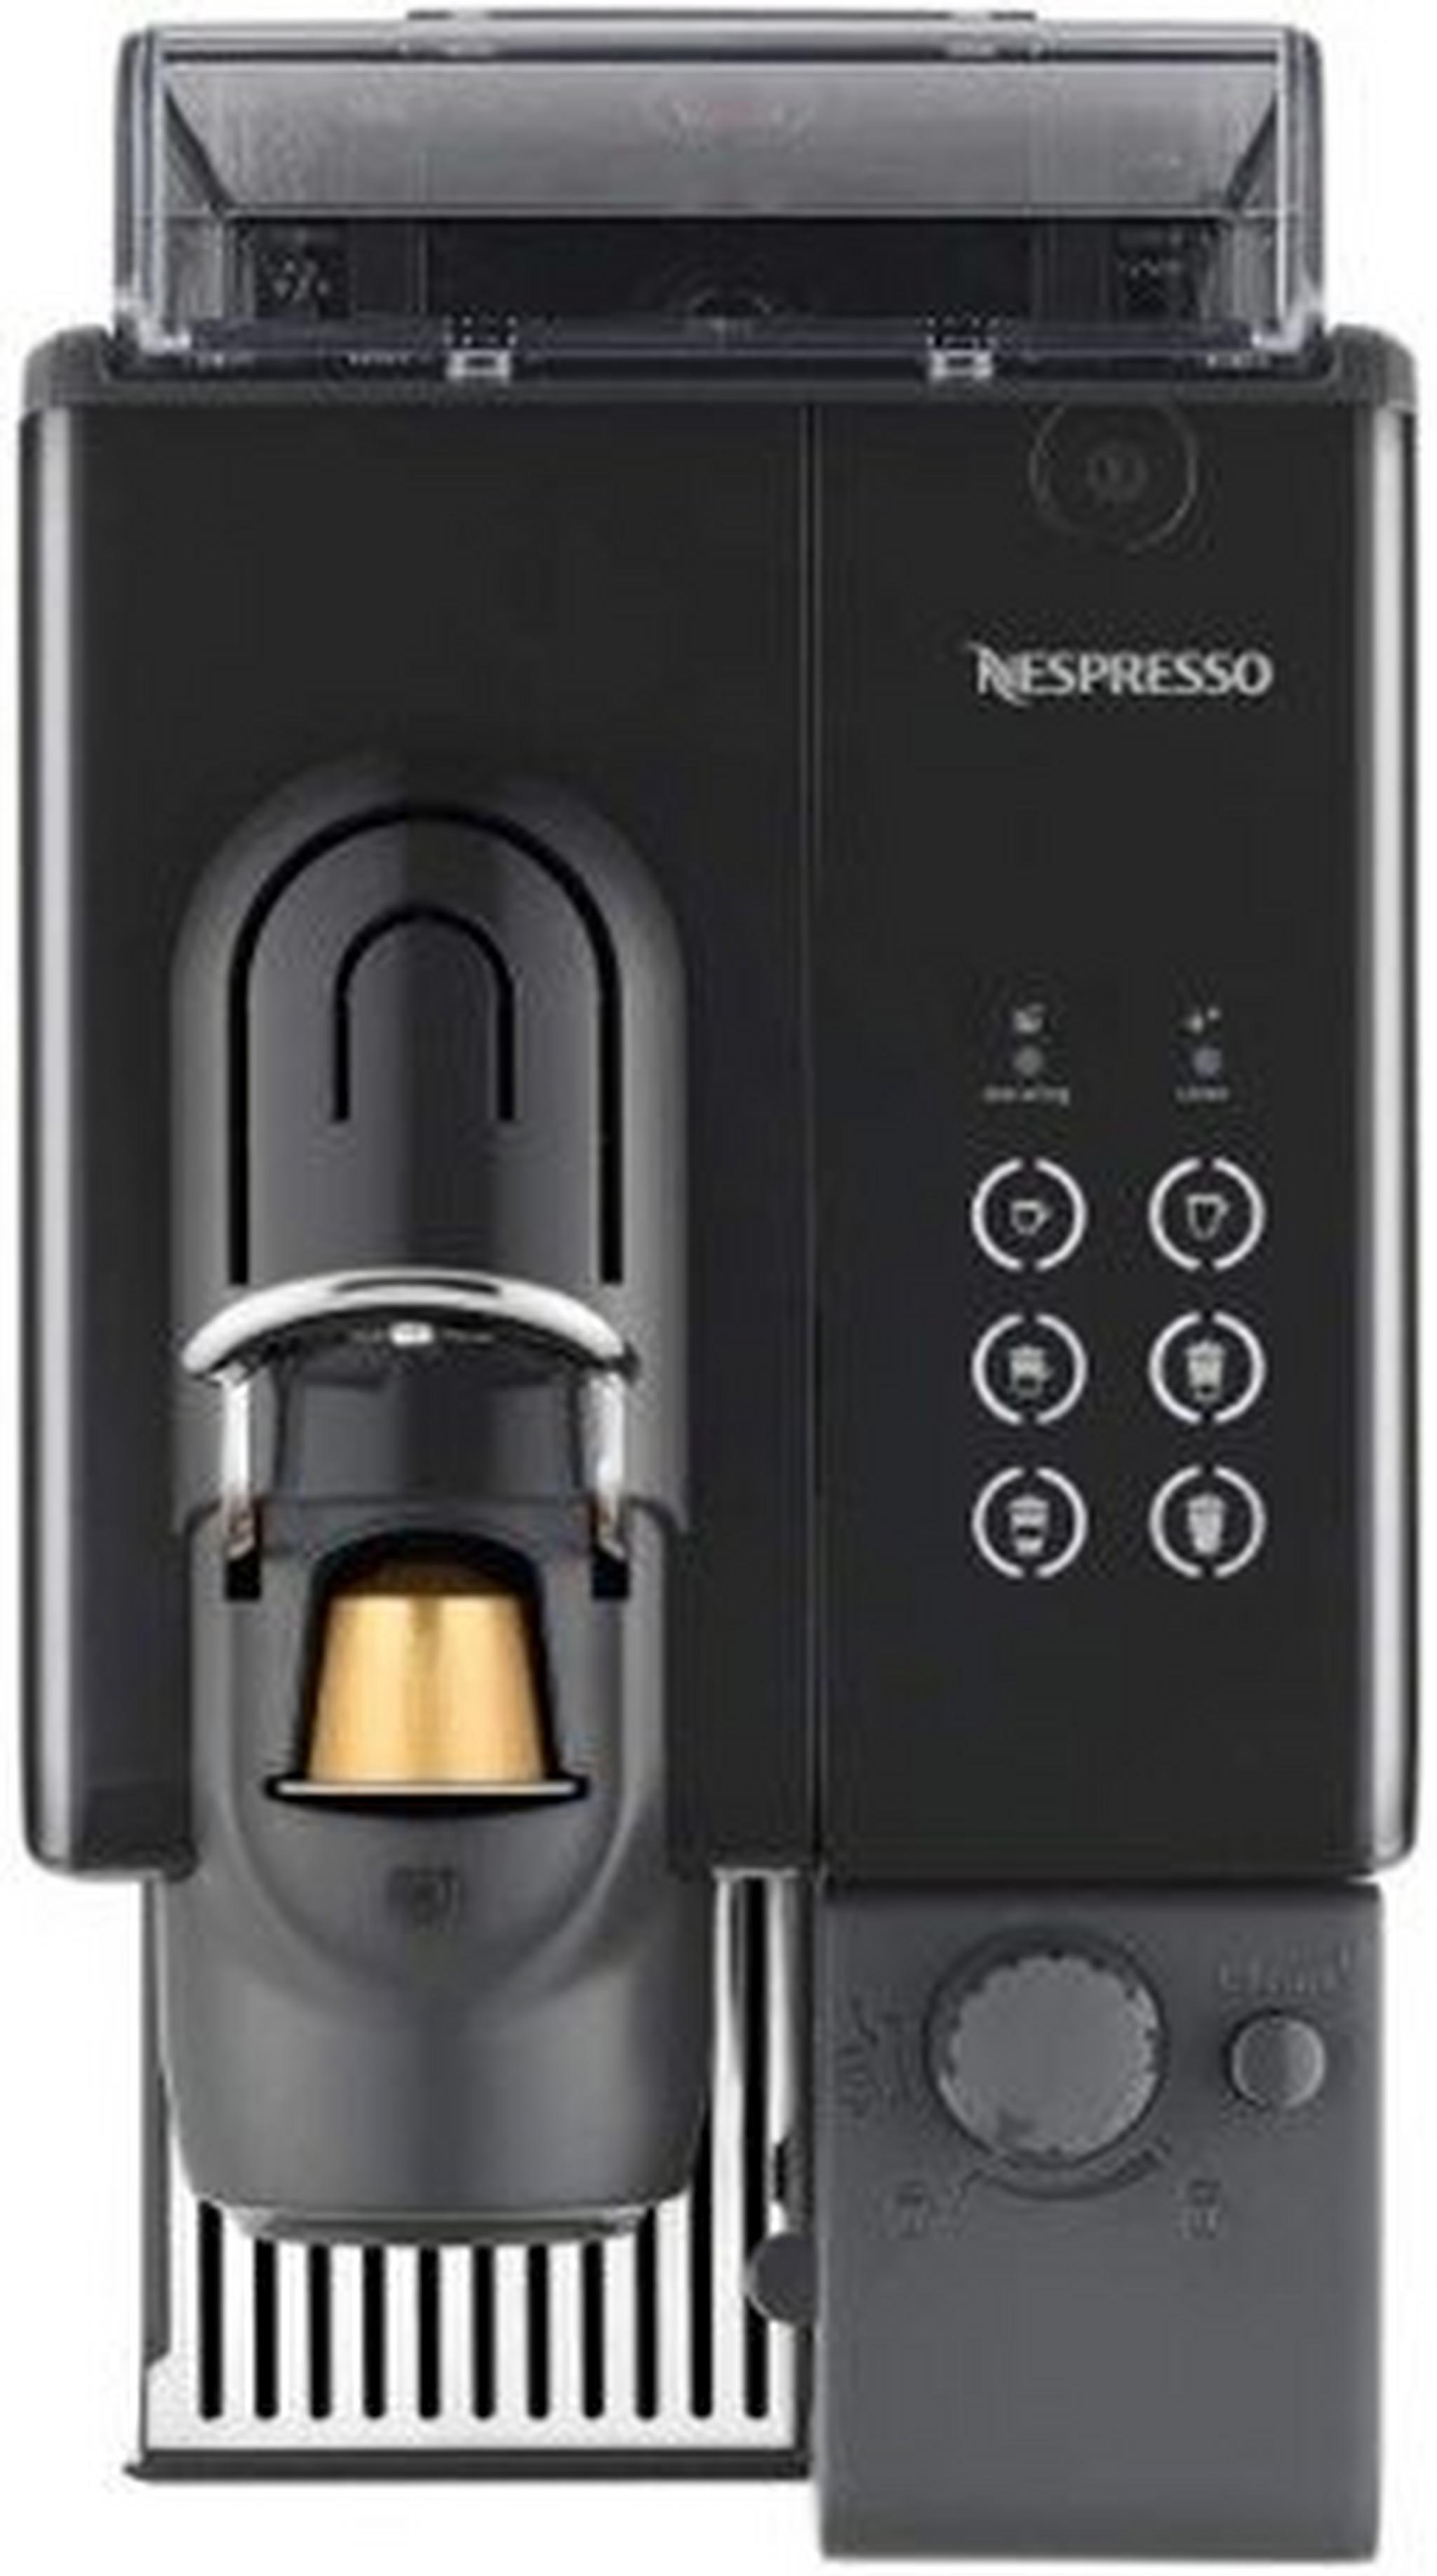 Nespresso Lattissima Touch Coffee Machine - Black (F521-ME-BK-NE)